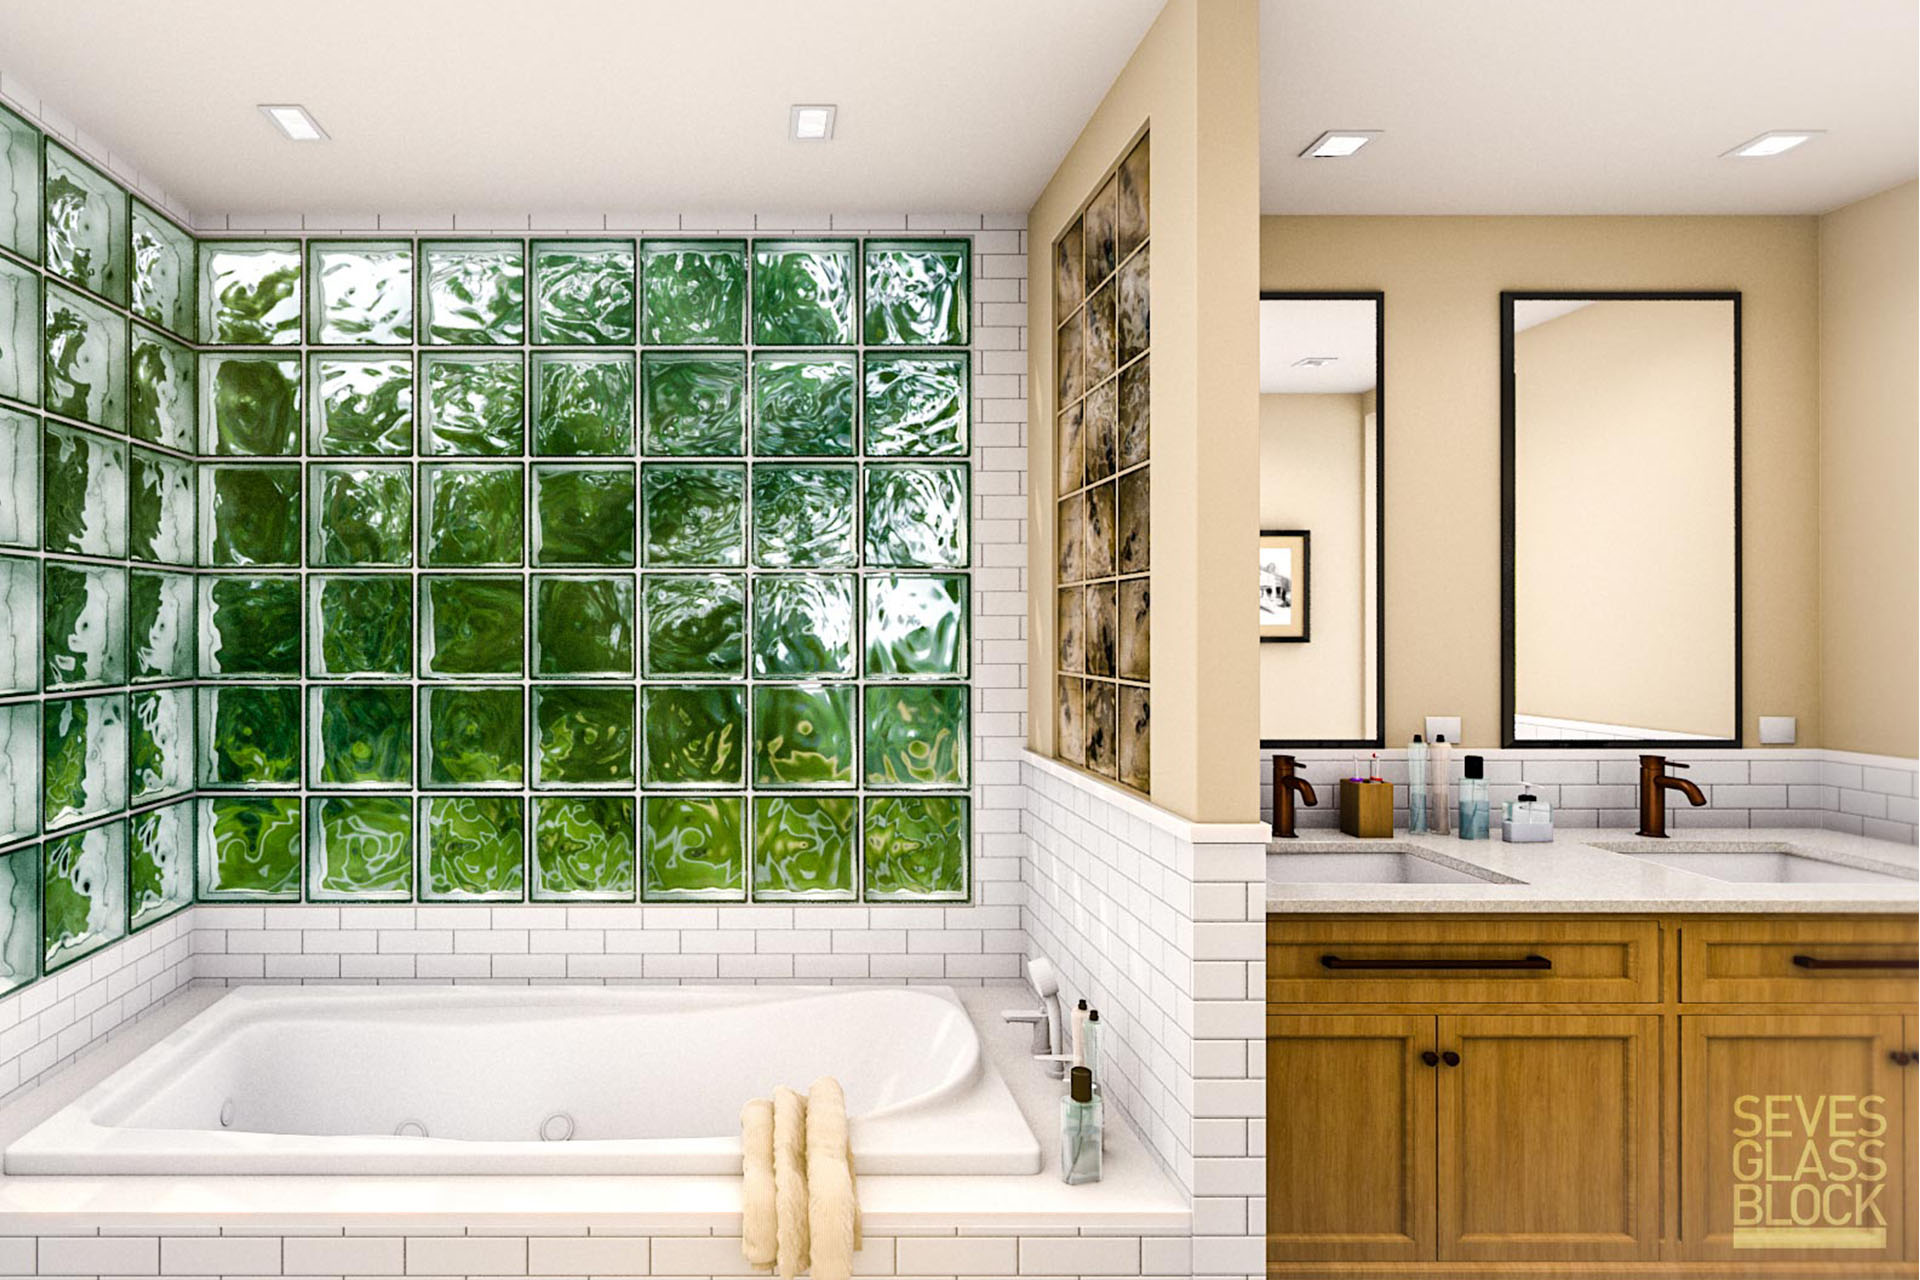 Bathroom design with glass block